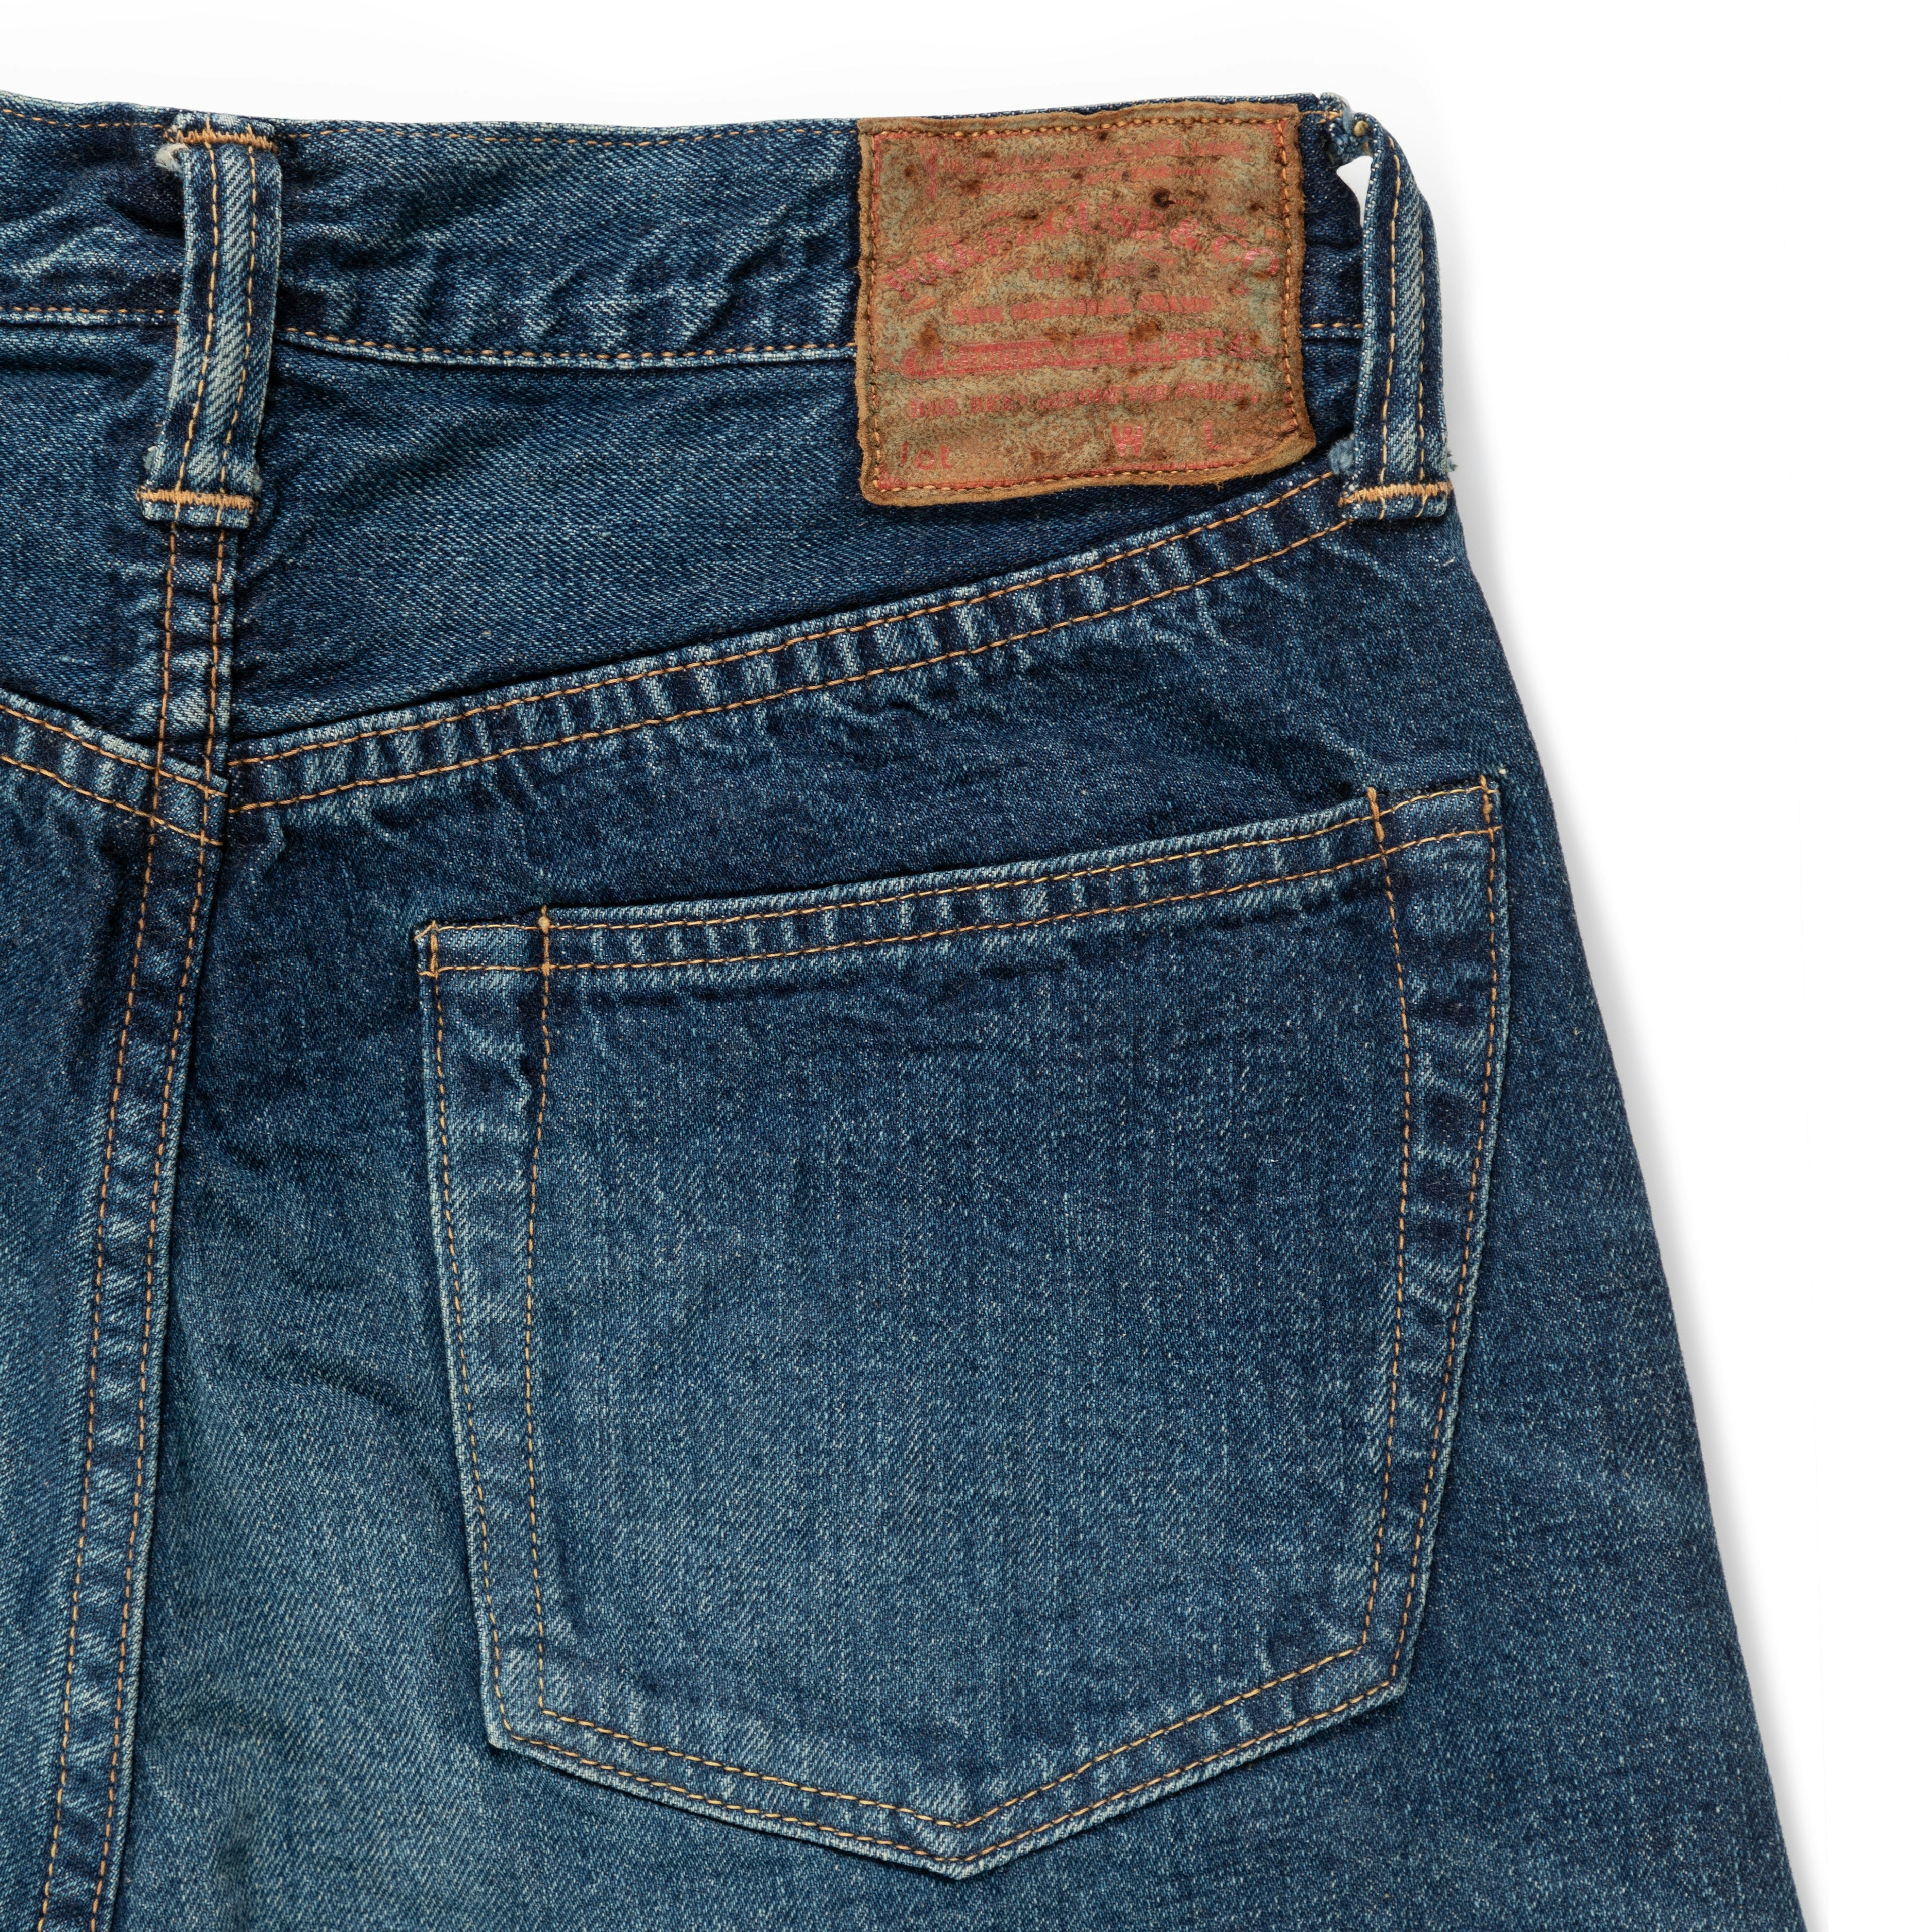 The 5 Pocket - Armoury Denim Jeans